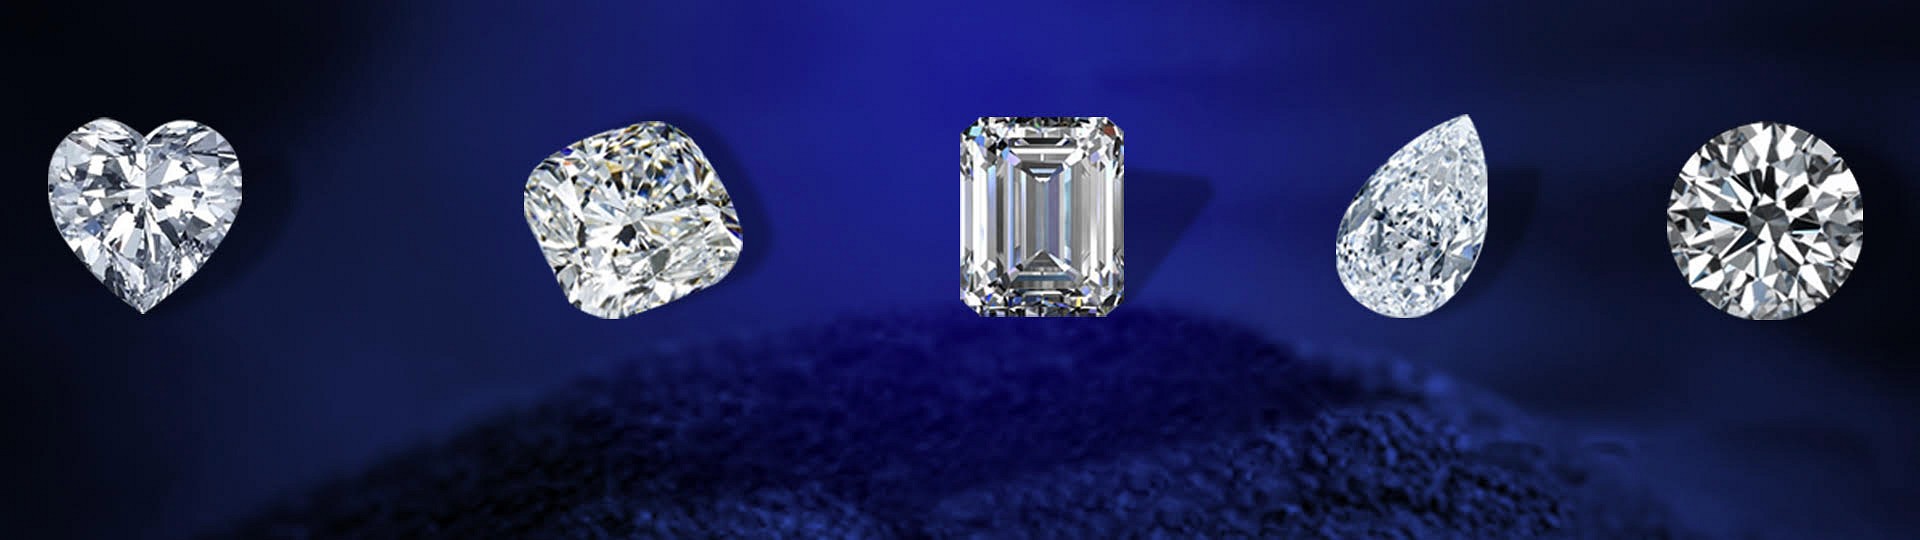 New Year's Day Creme De La Creme of Diamonds by Bid Global International Auctioneers LLC